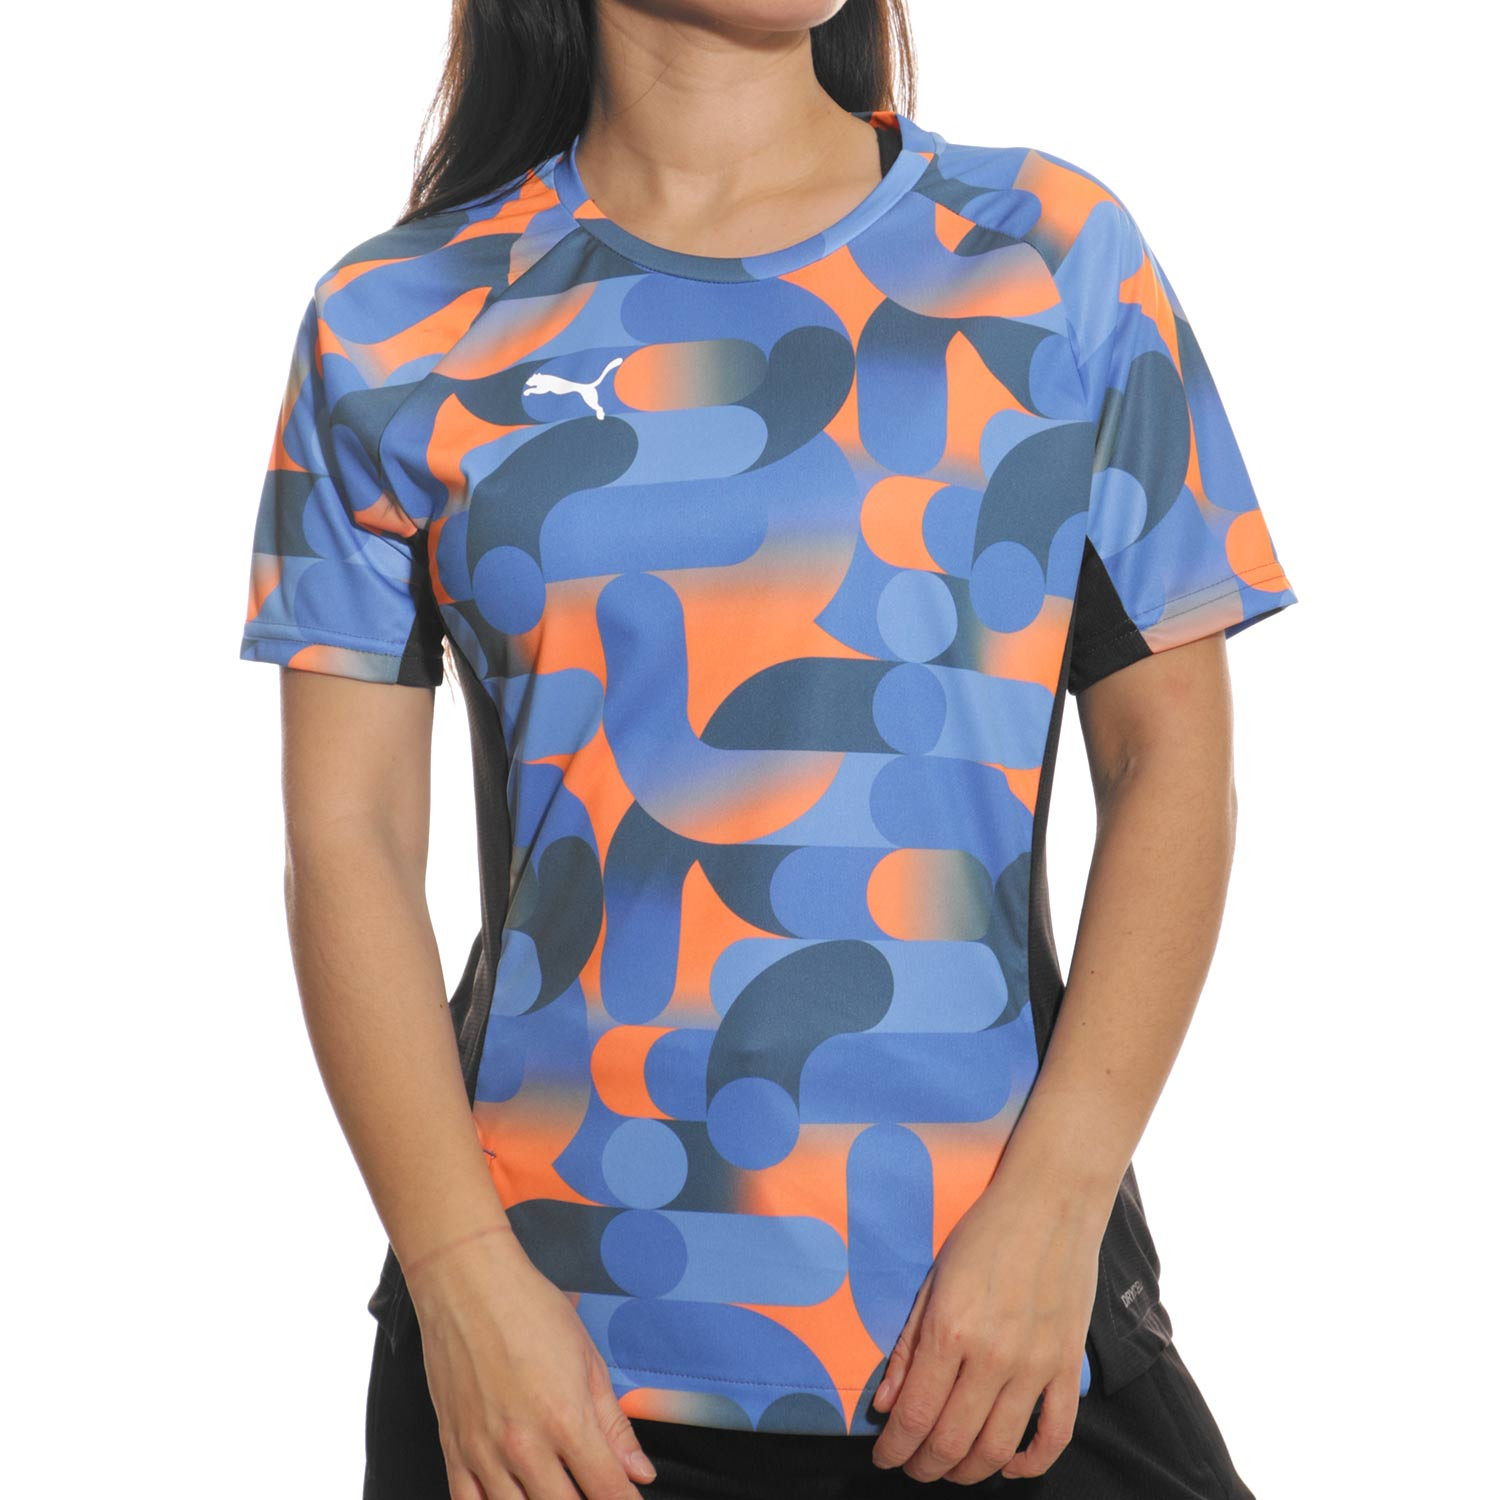 Camiseta Puma individualBLAZE mujer azul y naranja